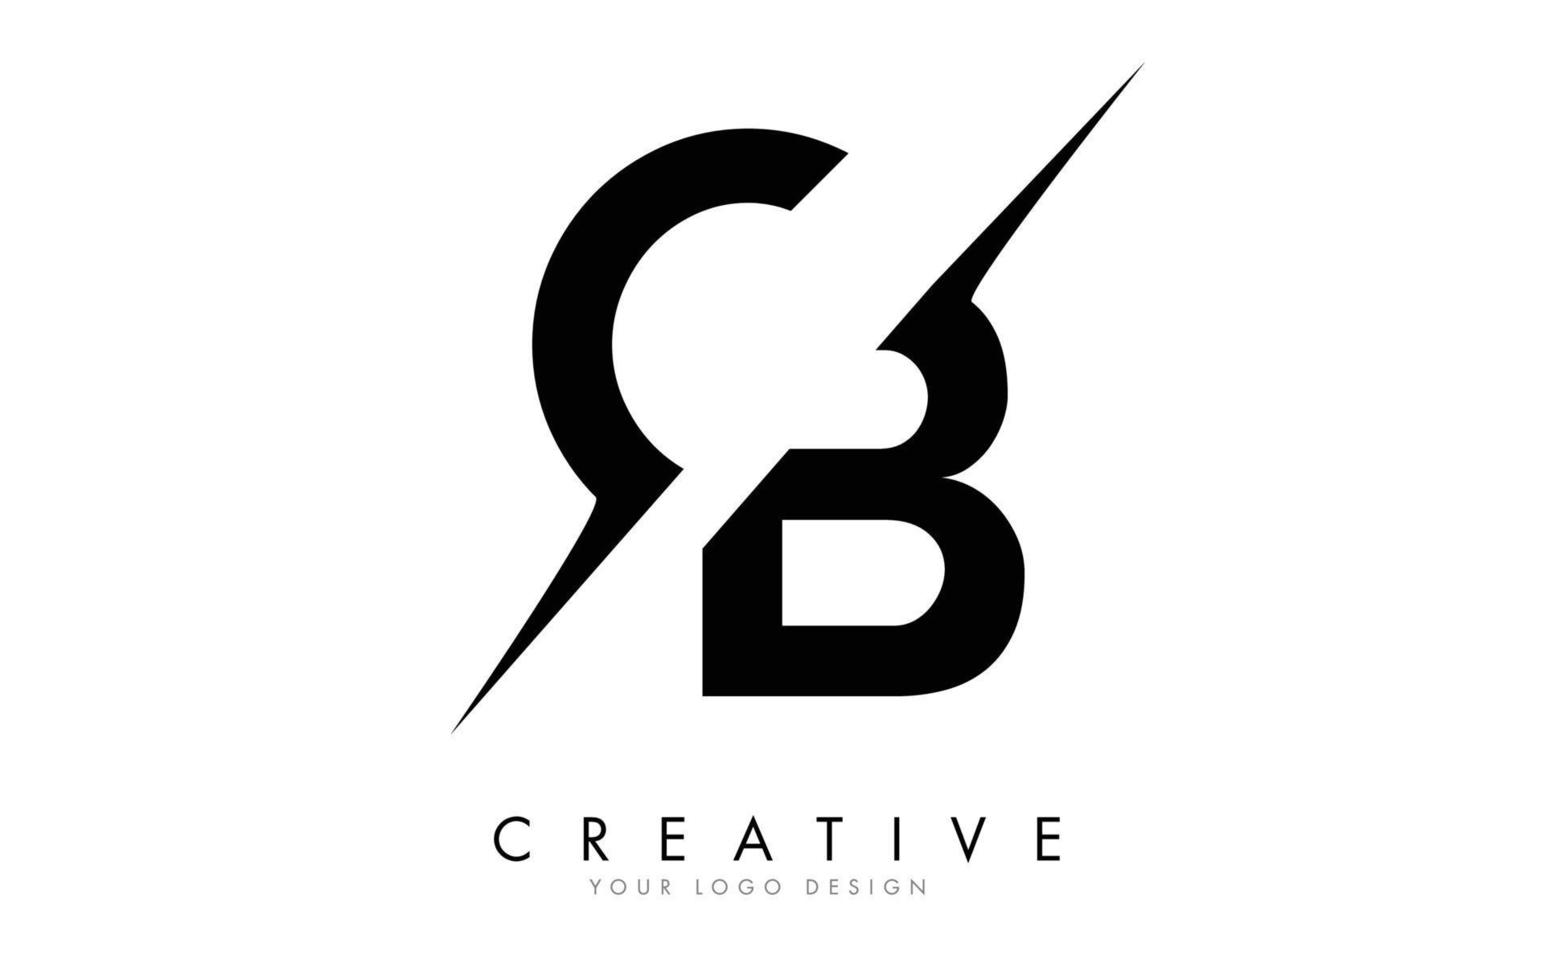 CB C B Letter Logo Design with a Creative Cut. vector